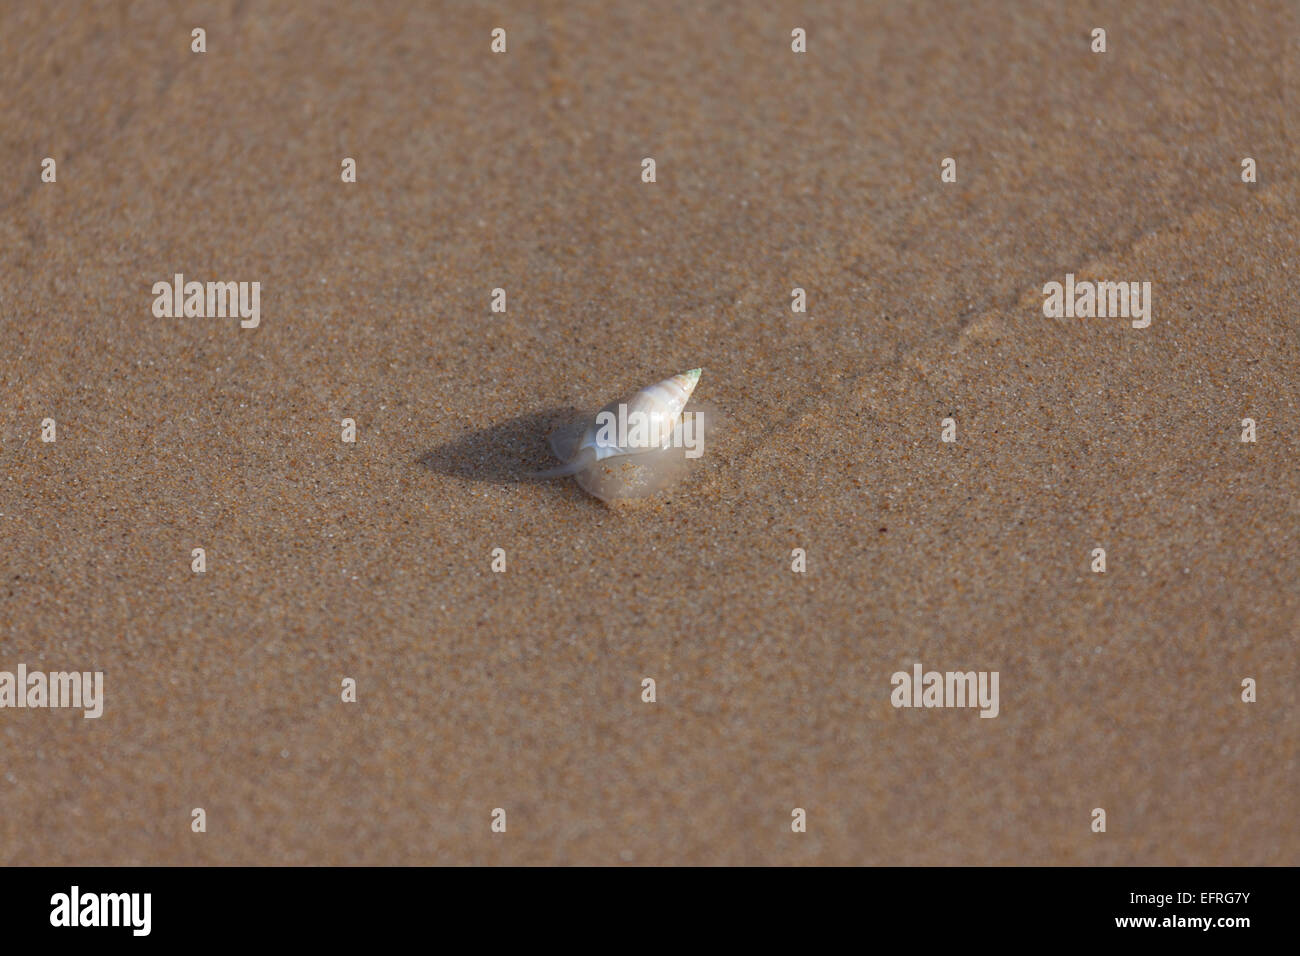 Wildlife : Bullia digitalis aka Finger Plough Shell or Plough shell. Sea snail, a marine gastropod mollusk. Stock Photo